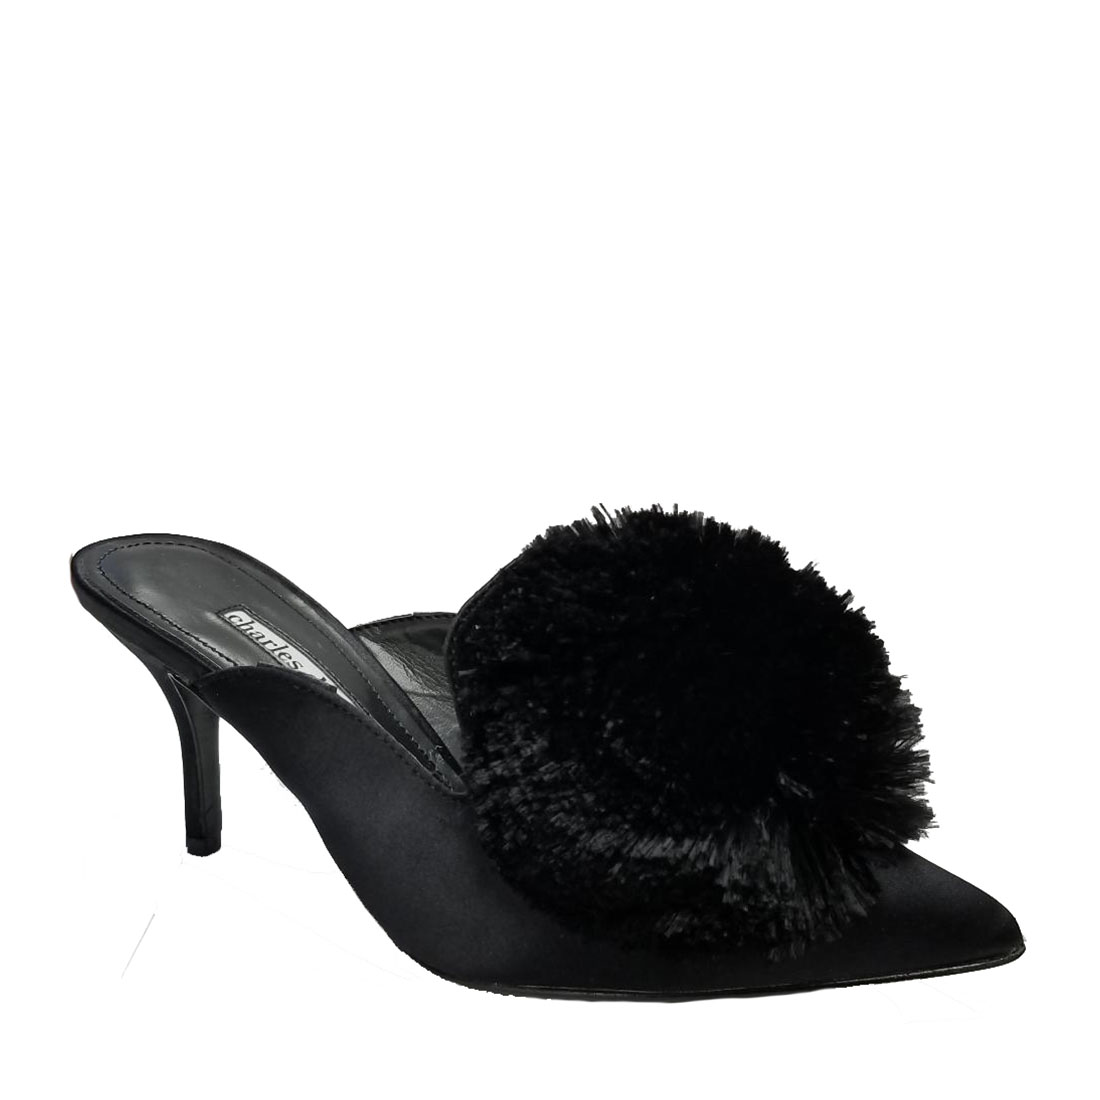 Charles David Adelle Women/Adult shoe size 7  Casual 2C18F001-BLACK Black - image 1 of 8